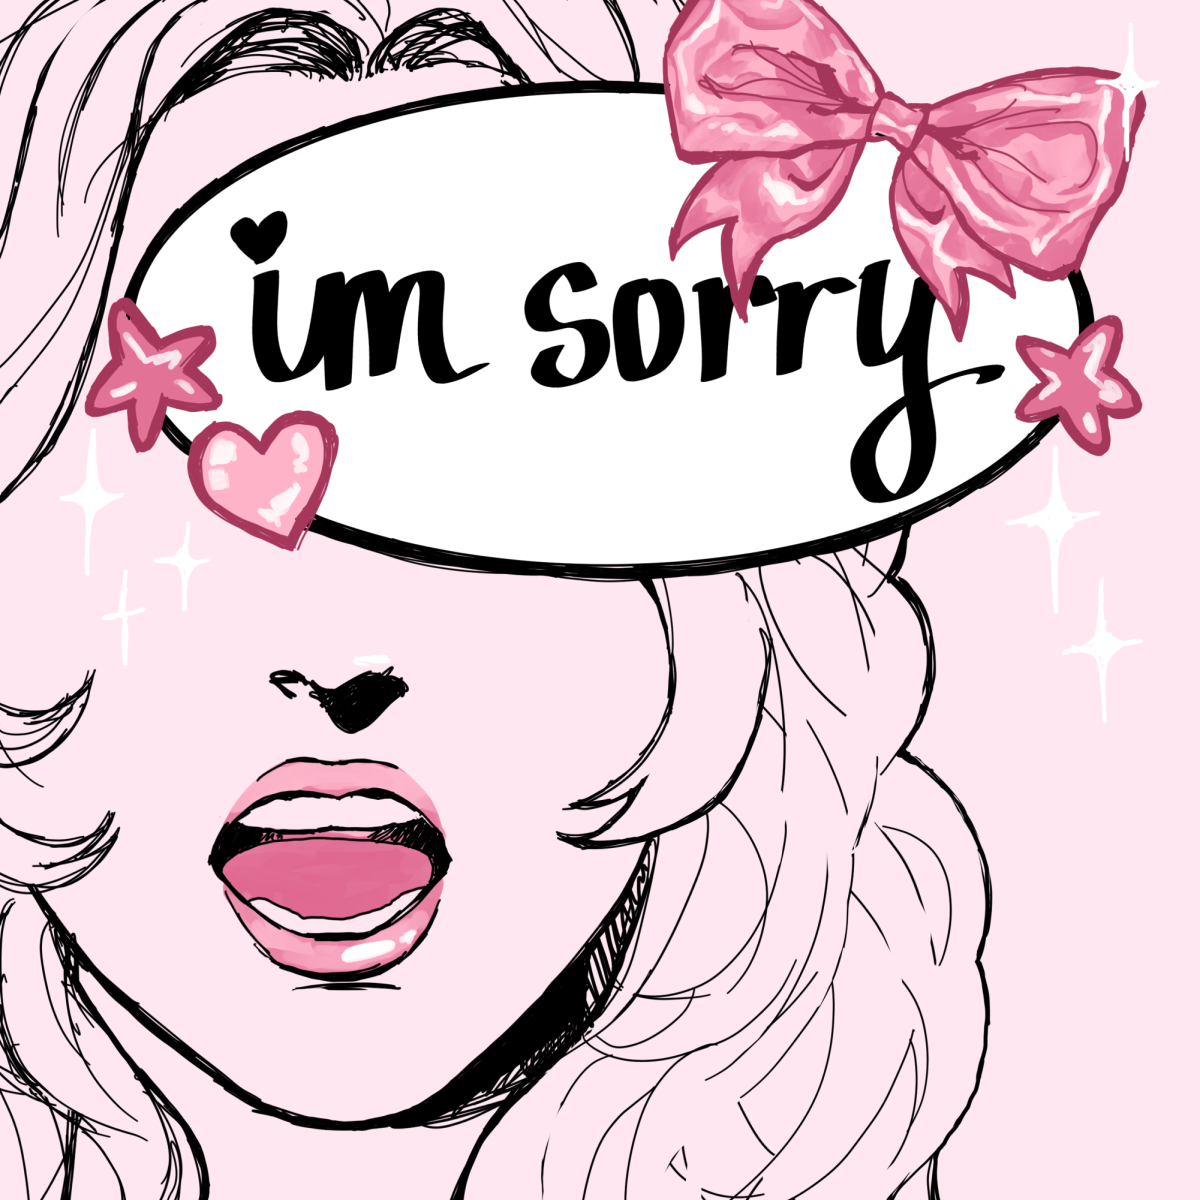 Opinion+%7C+The+feminine+urge+to+apologize